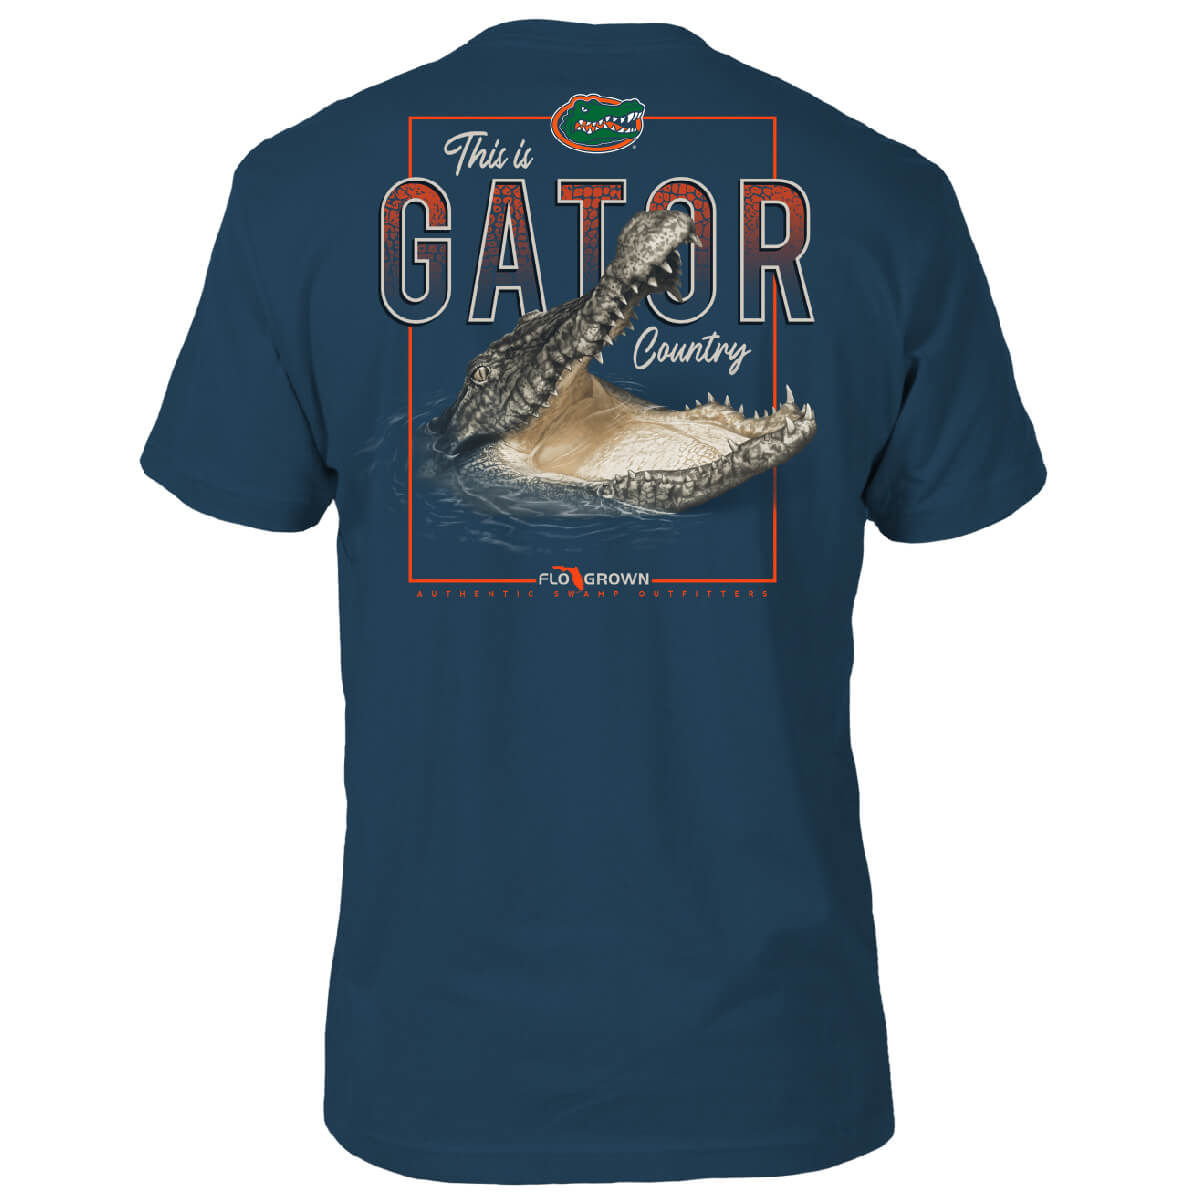 Florida Gators Gator Country Tee - Back